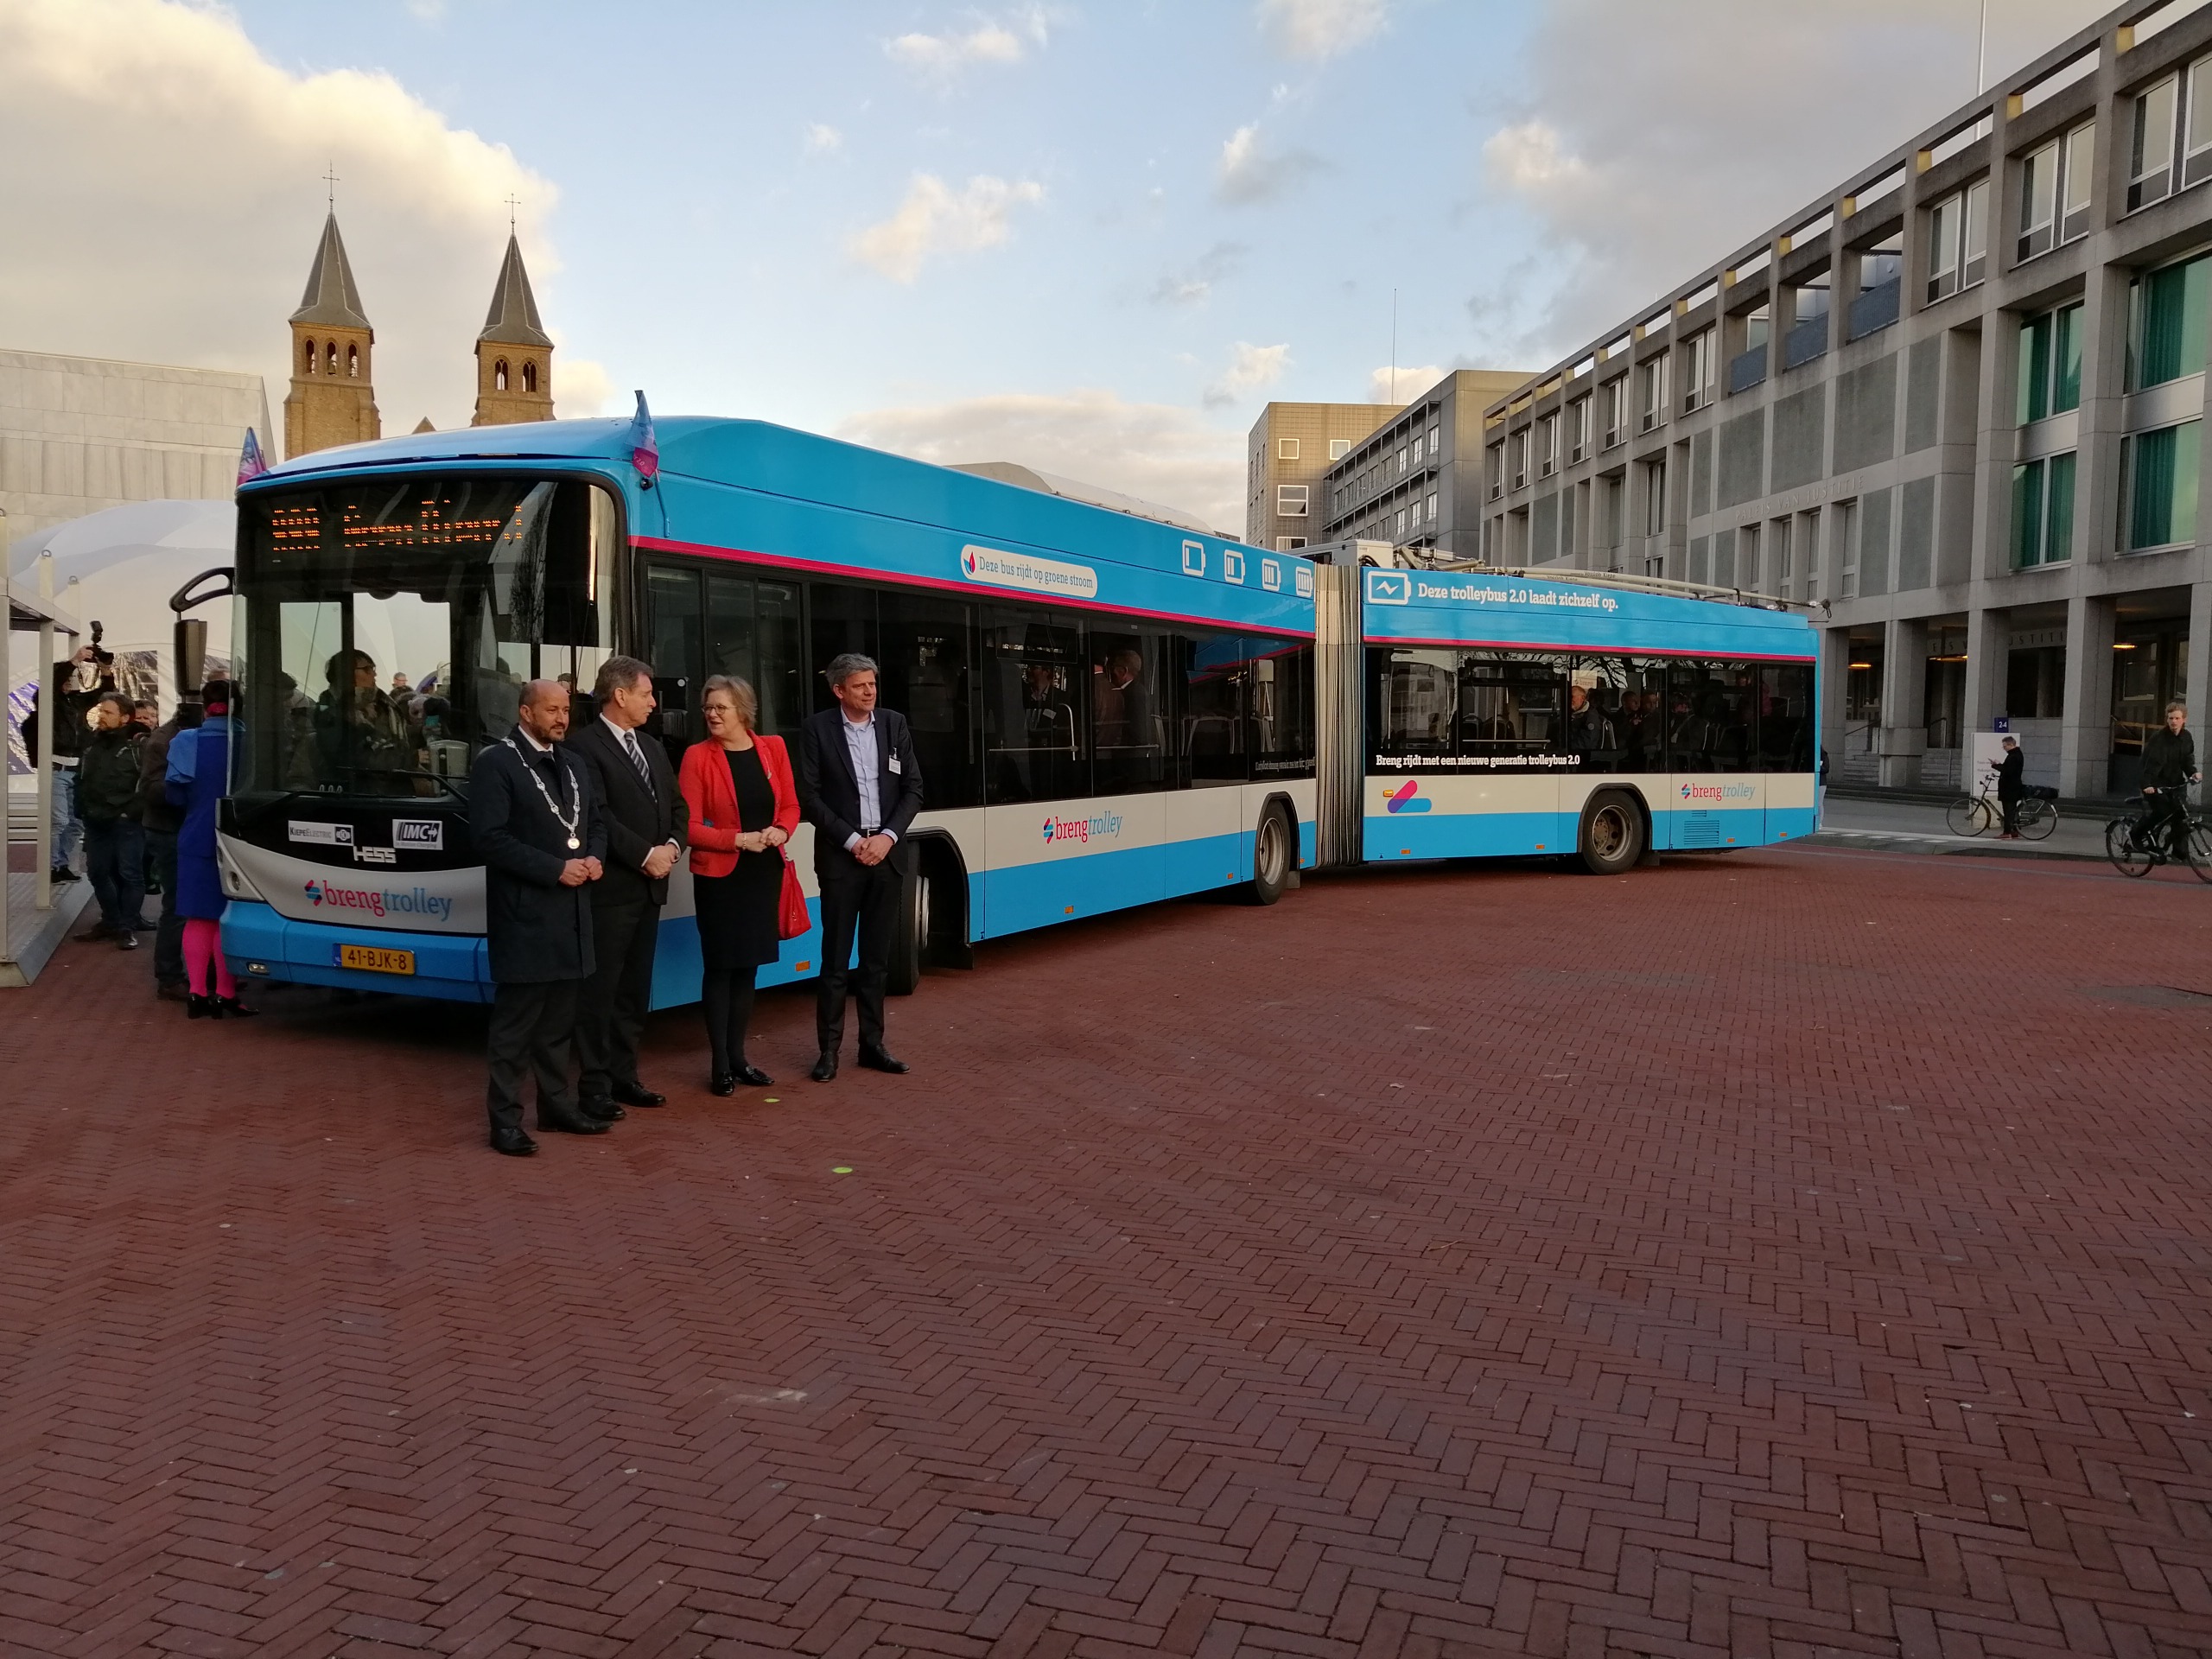 Duits tintje aan nieuwe trolleybussen in Arnhem